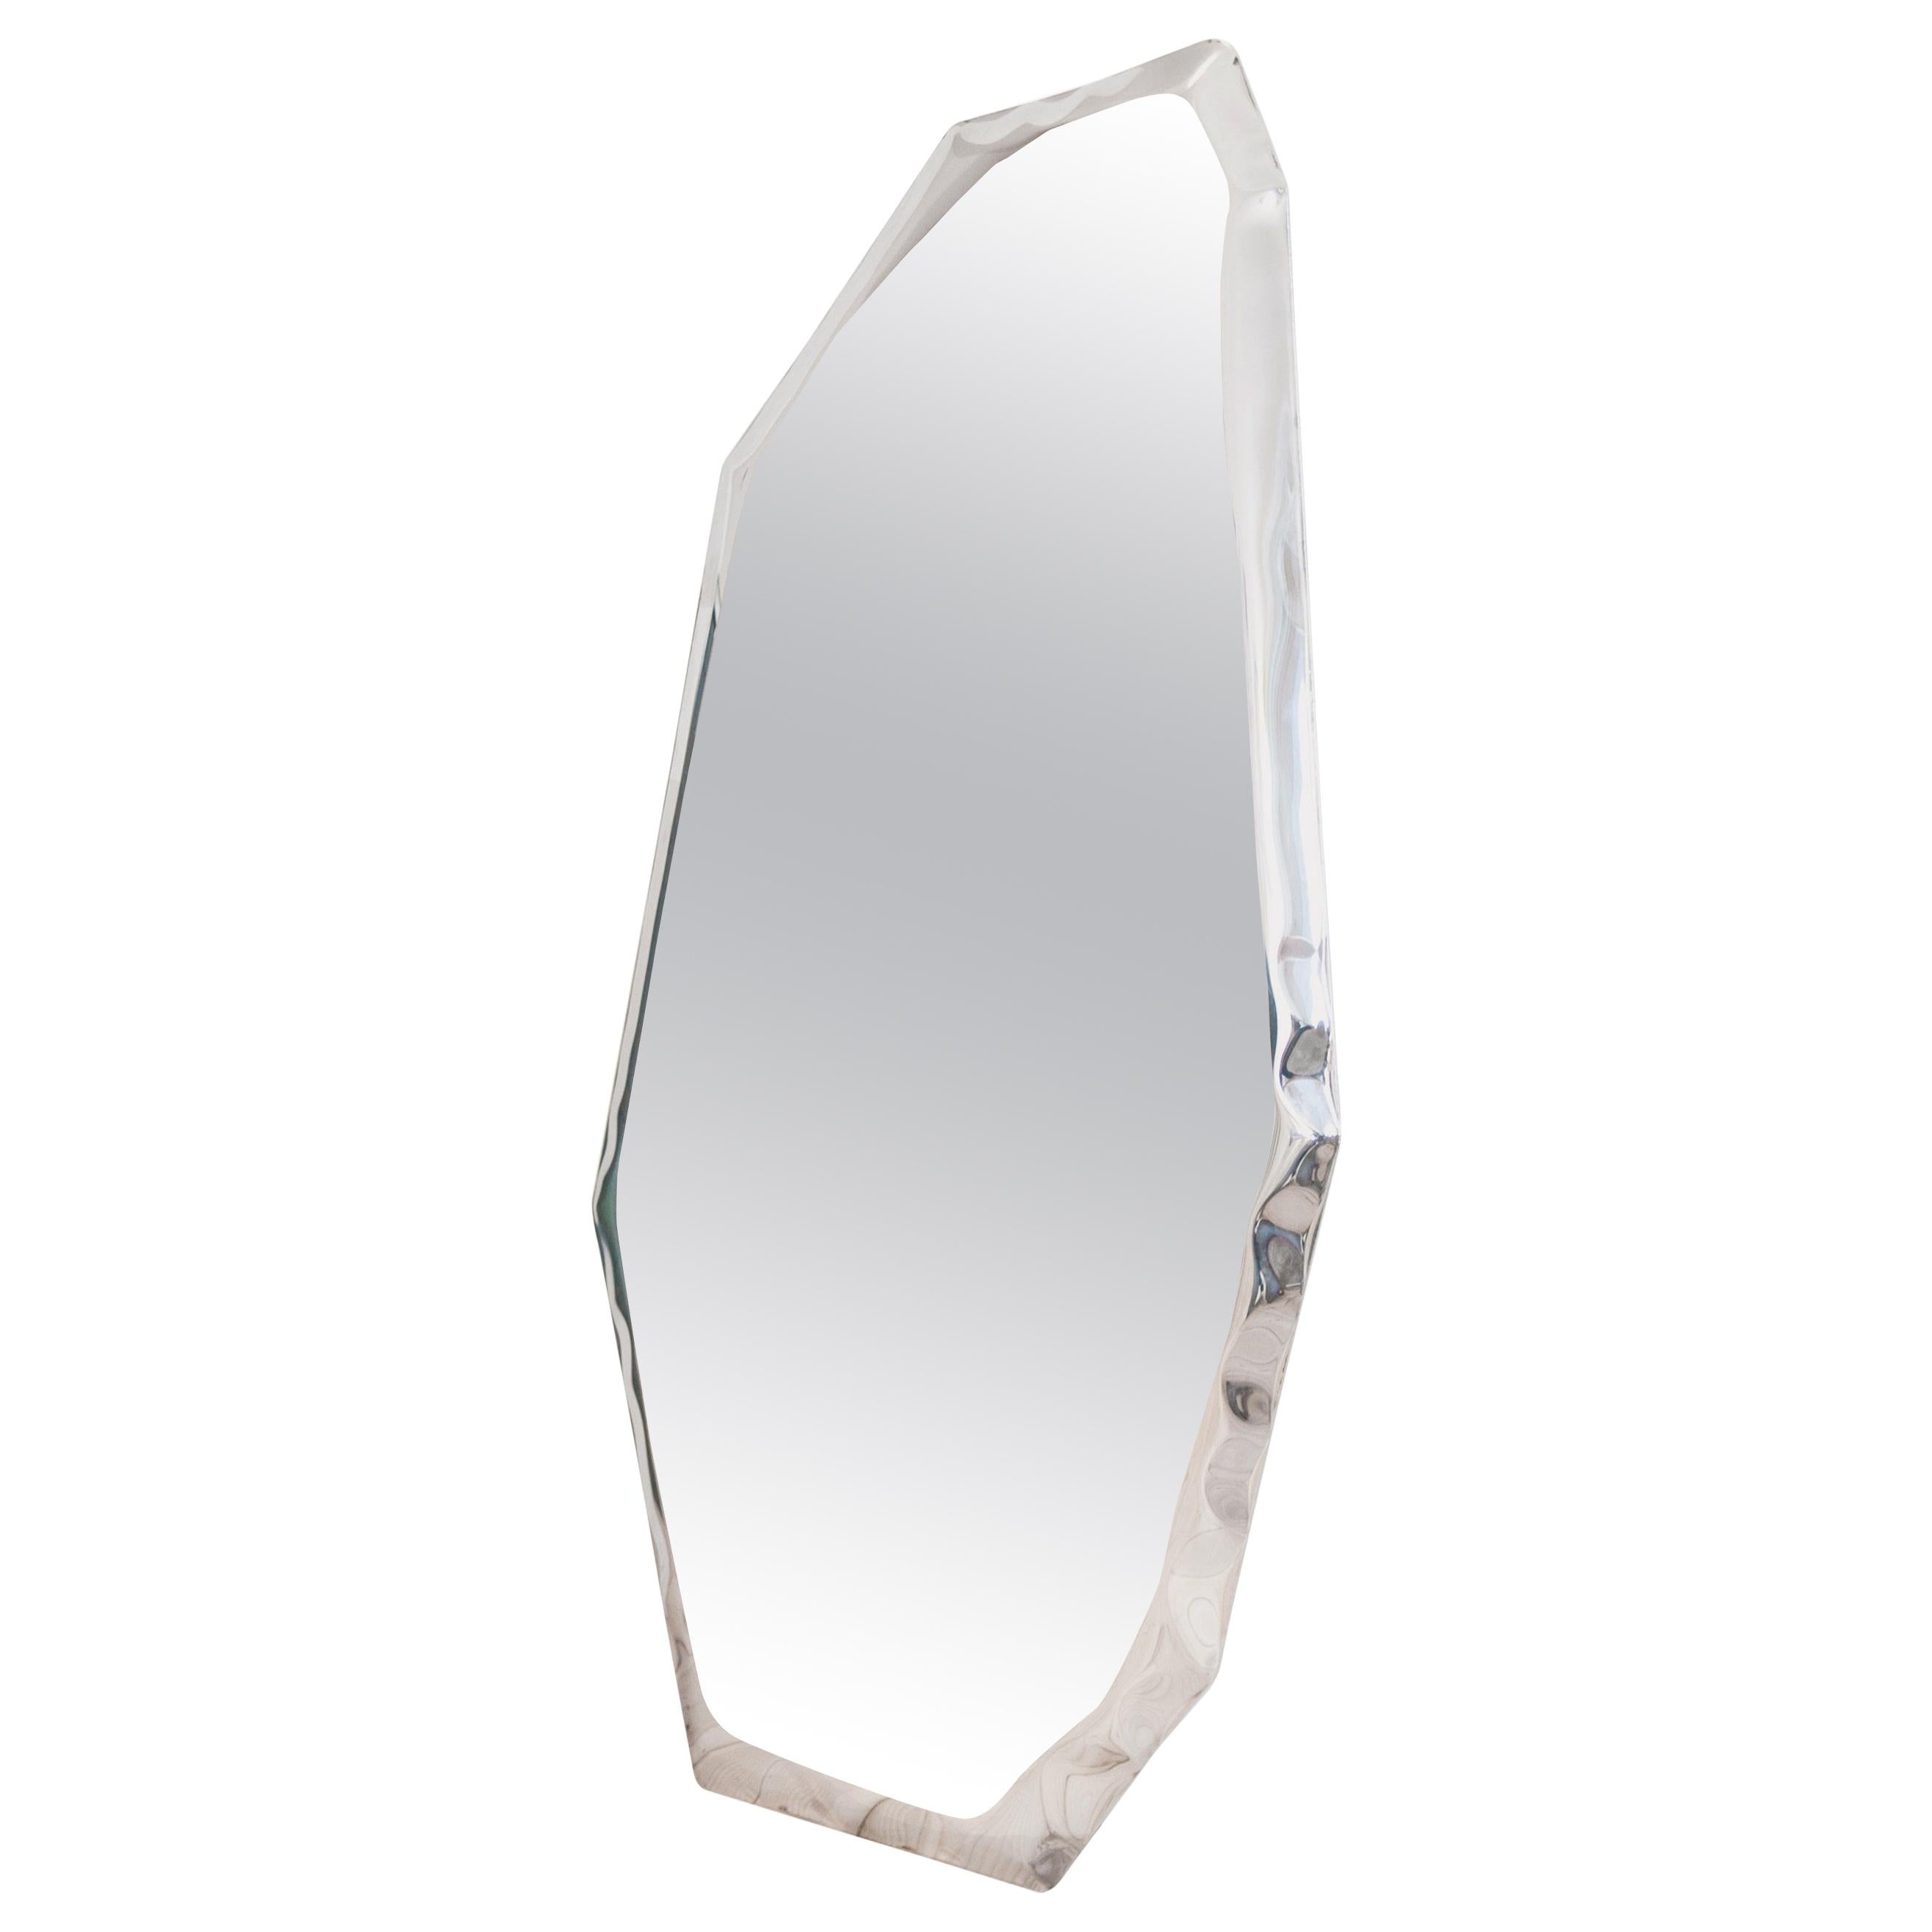 Mirror 'Tafla C4' in Polished Stainless Steel by Zieta, In stock